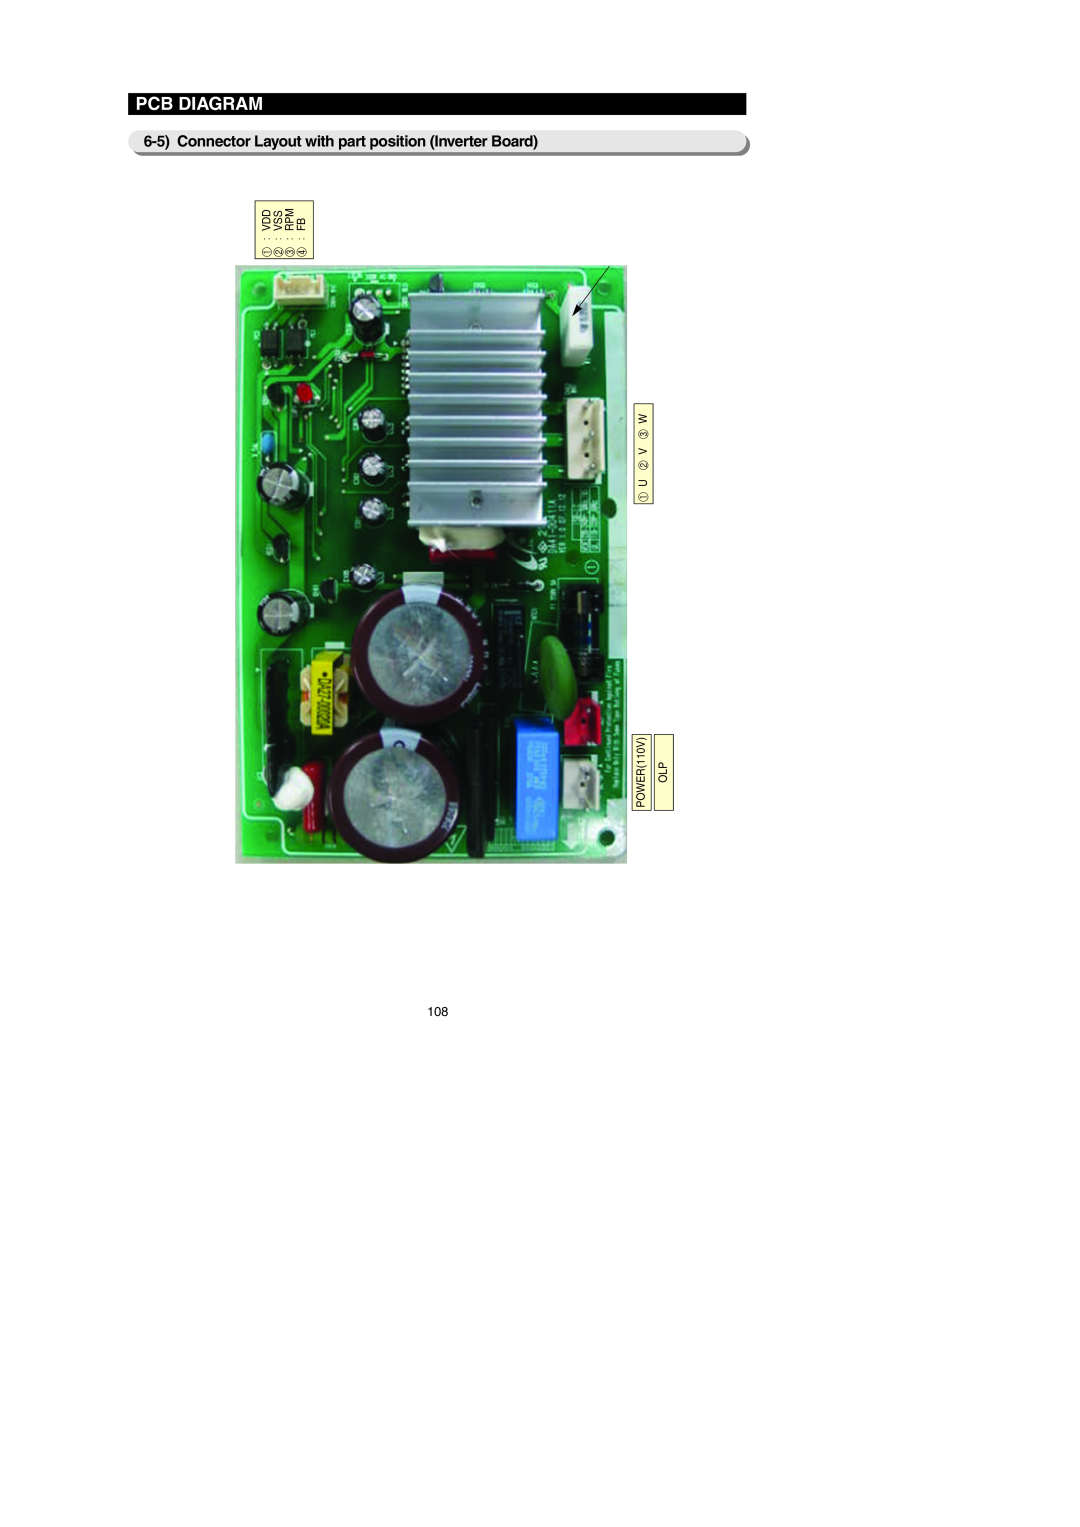 Samsung RF267AEPN, RF267AEBP Pcb Diagram, Connector Layout with part position Inverter Board, Fb Rpm Vss, U V W POWER110V 